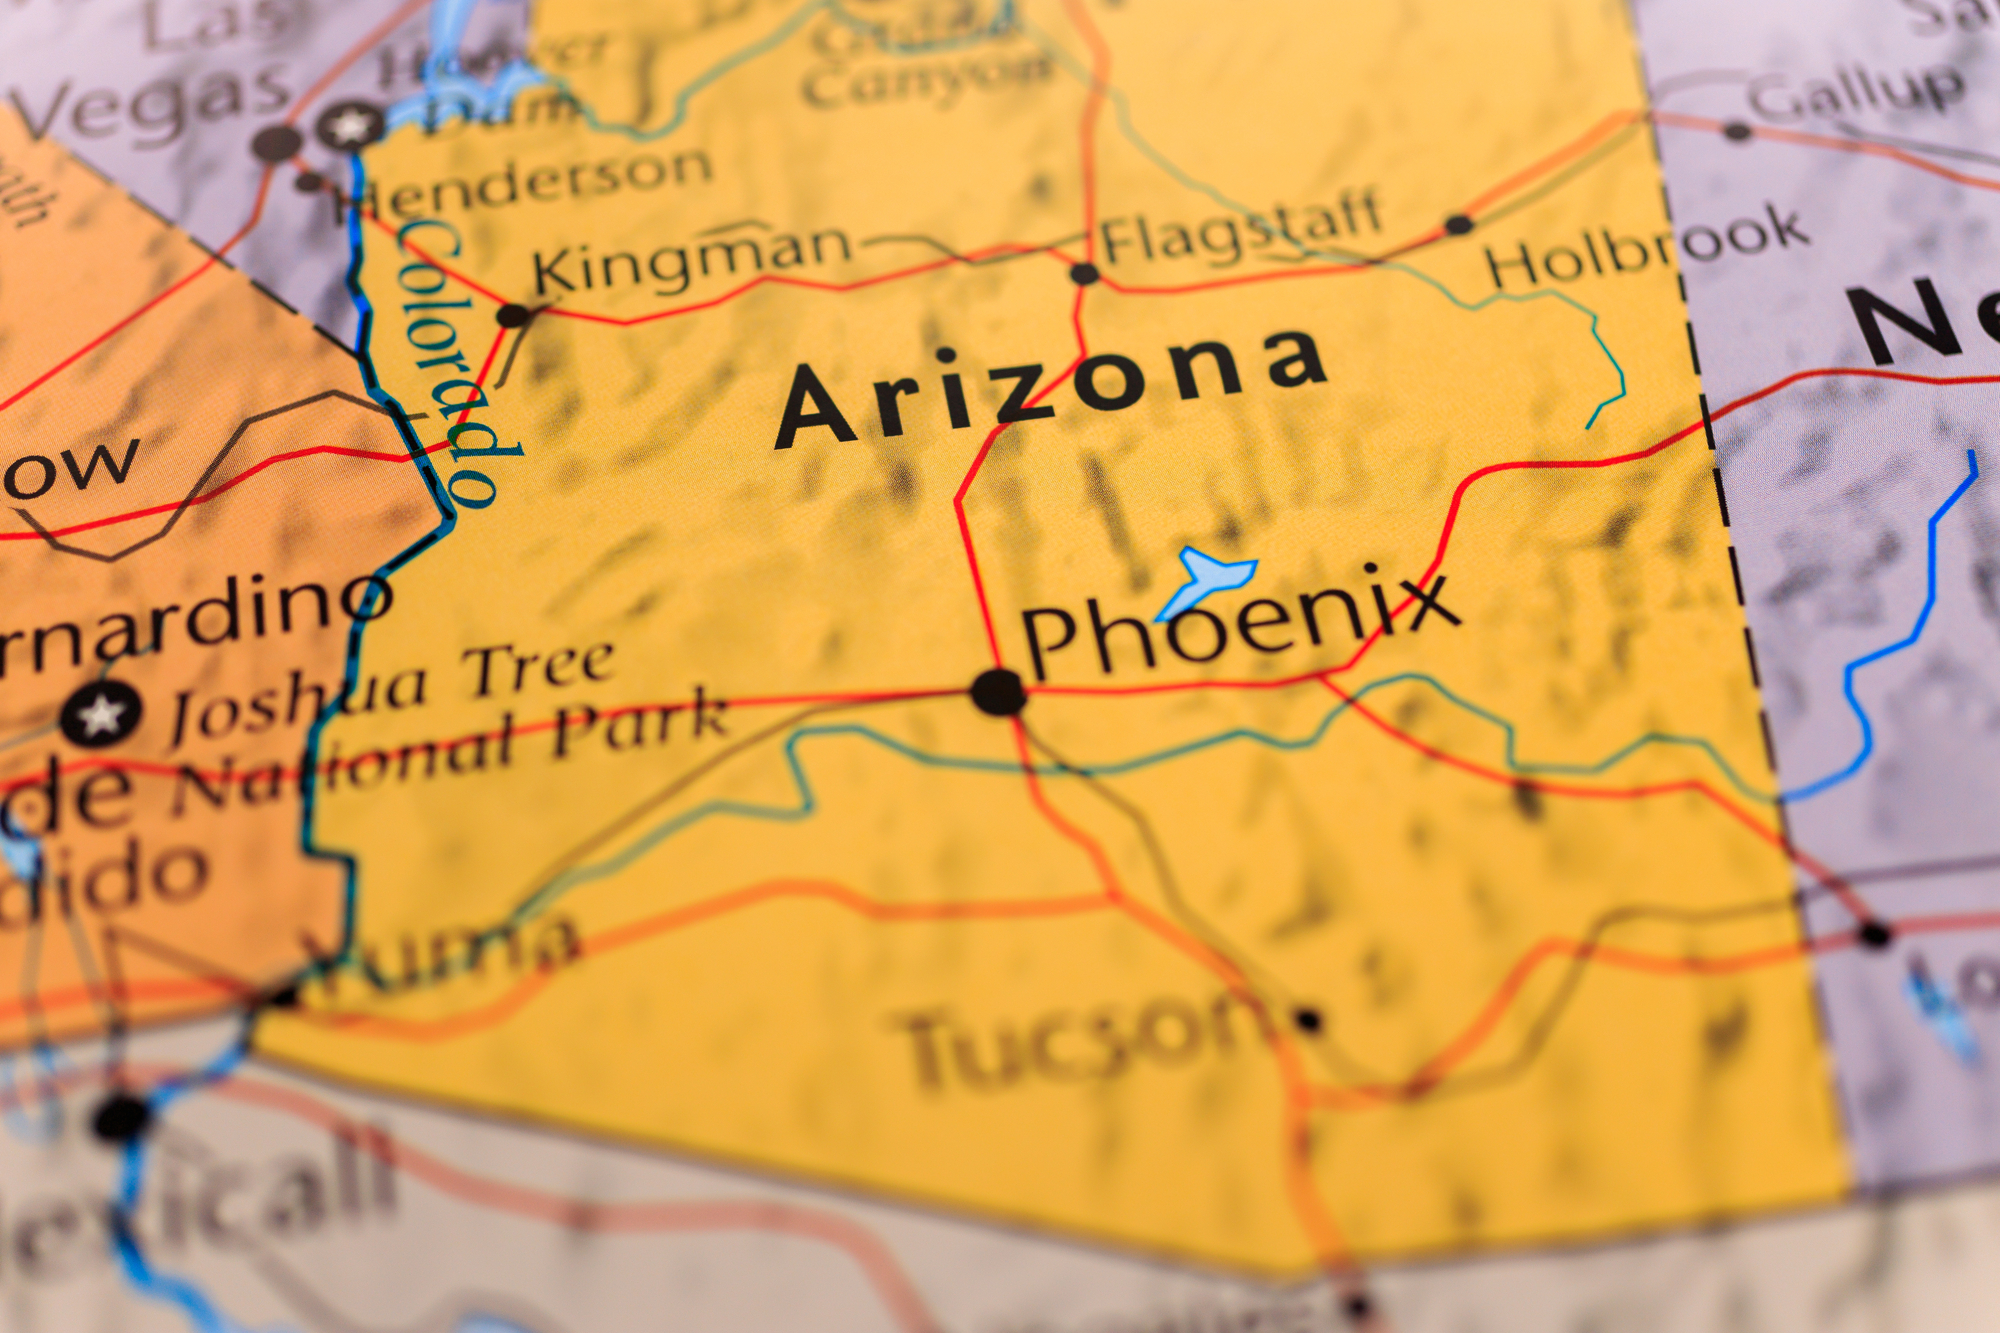 Maps of Arizona